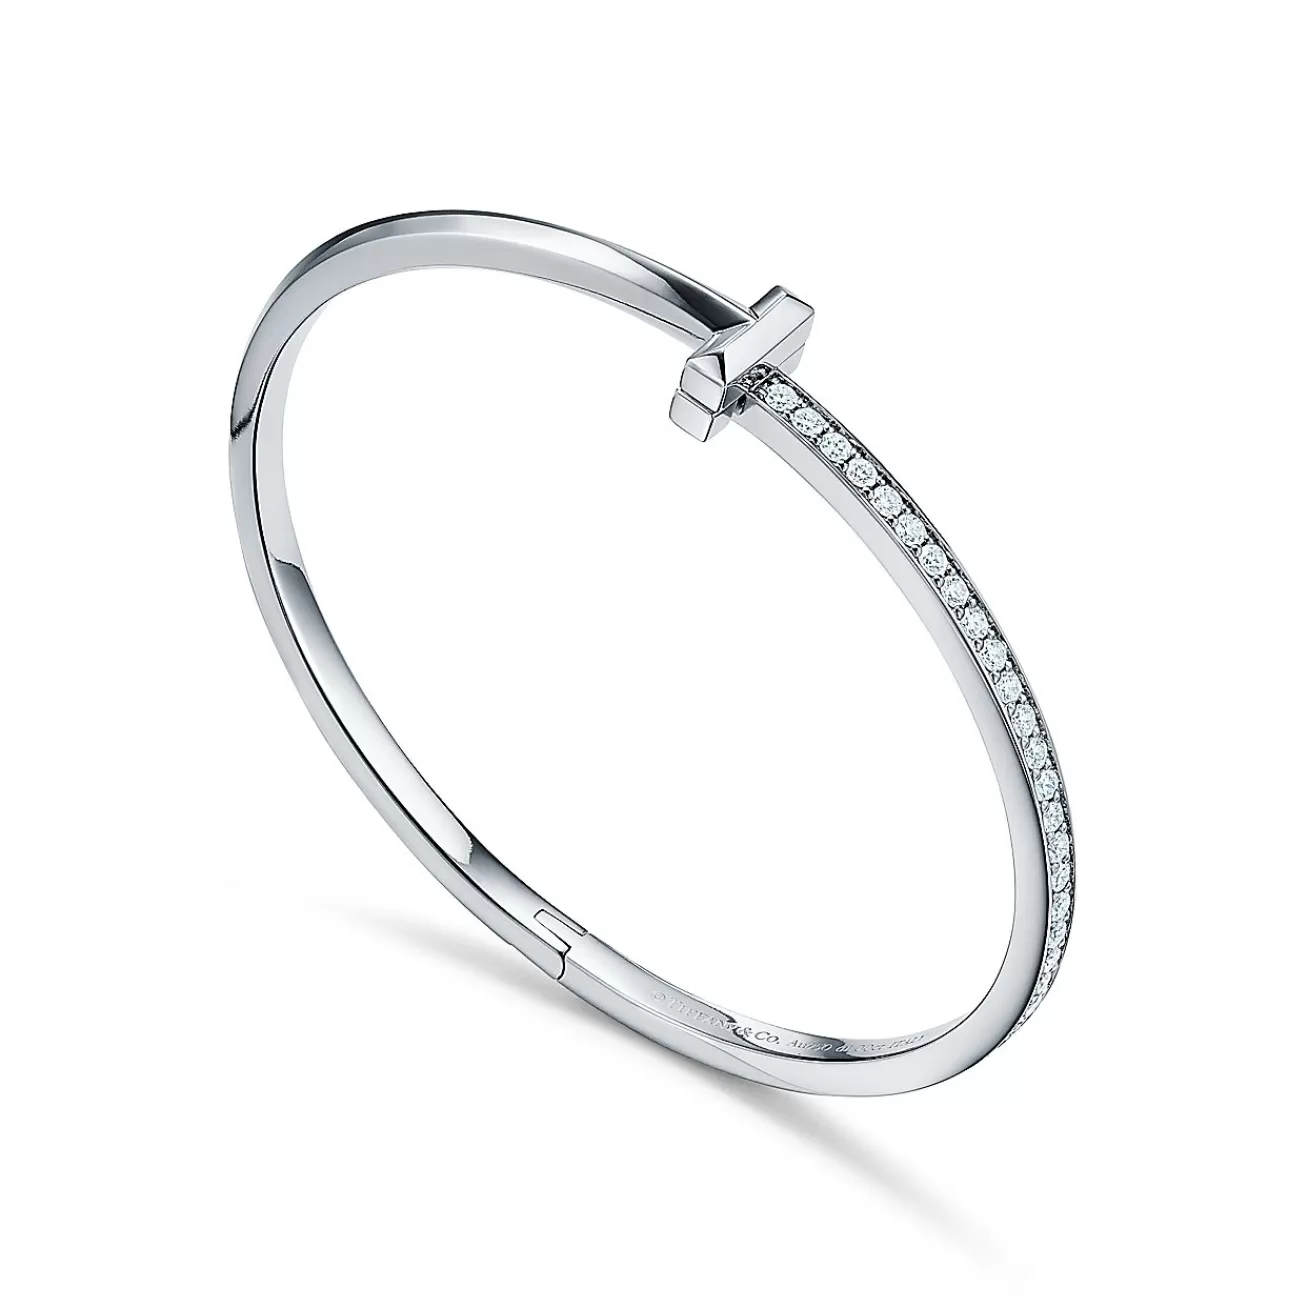 Tiffany & Co. Tiffany T T1 narrow diamond hinged bangle in 18k white gold, medium. | ^ Bracelets | Gifts for Her